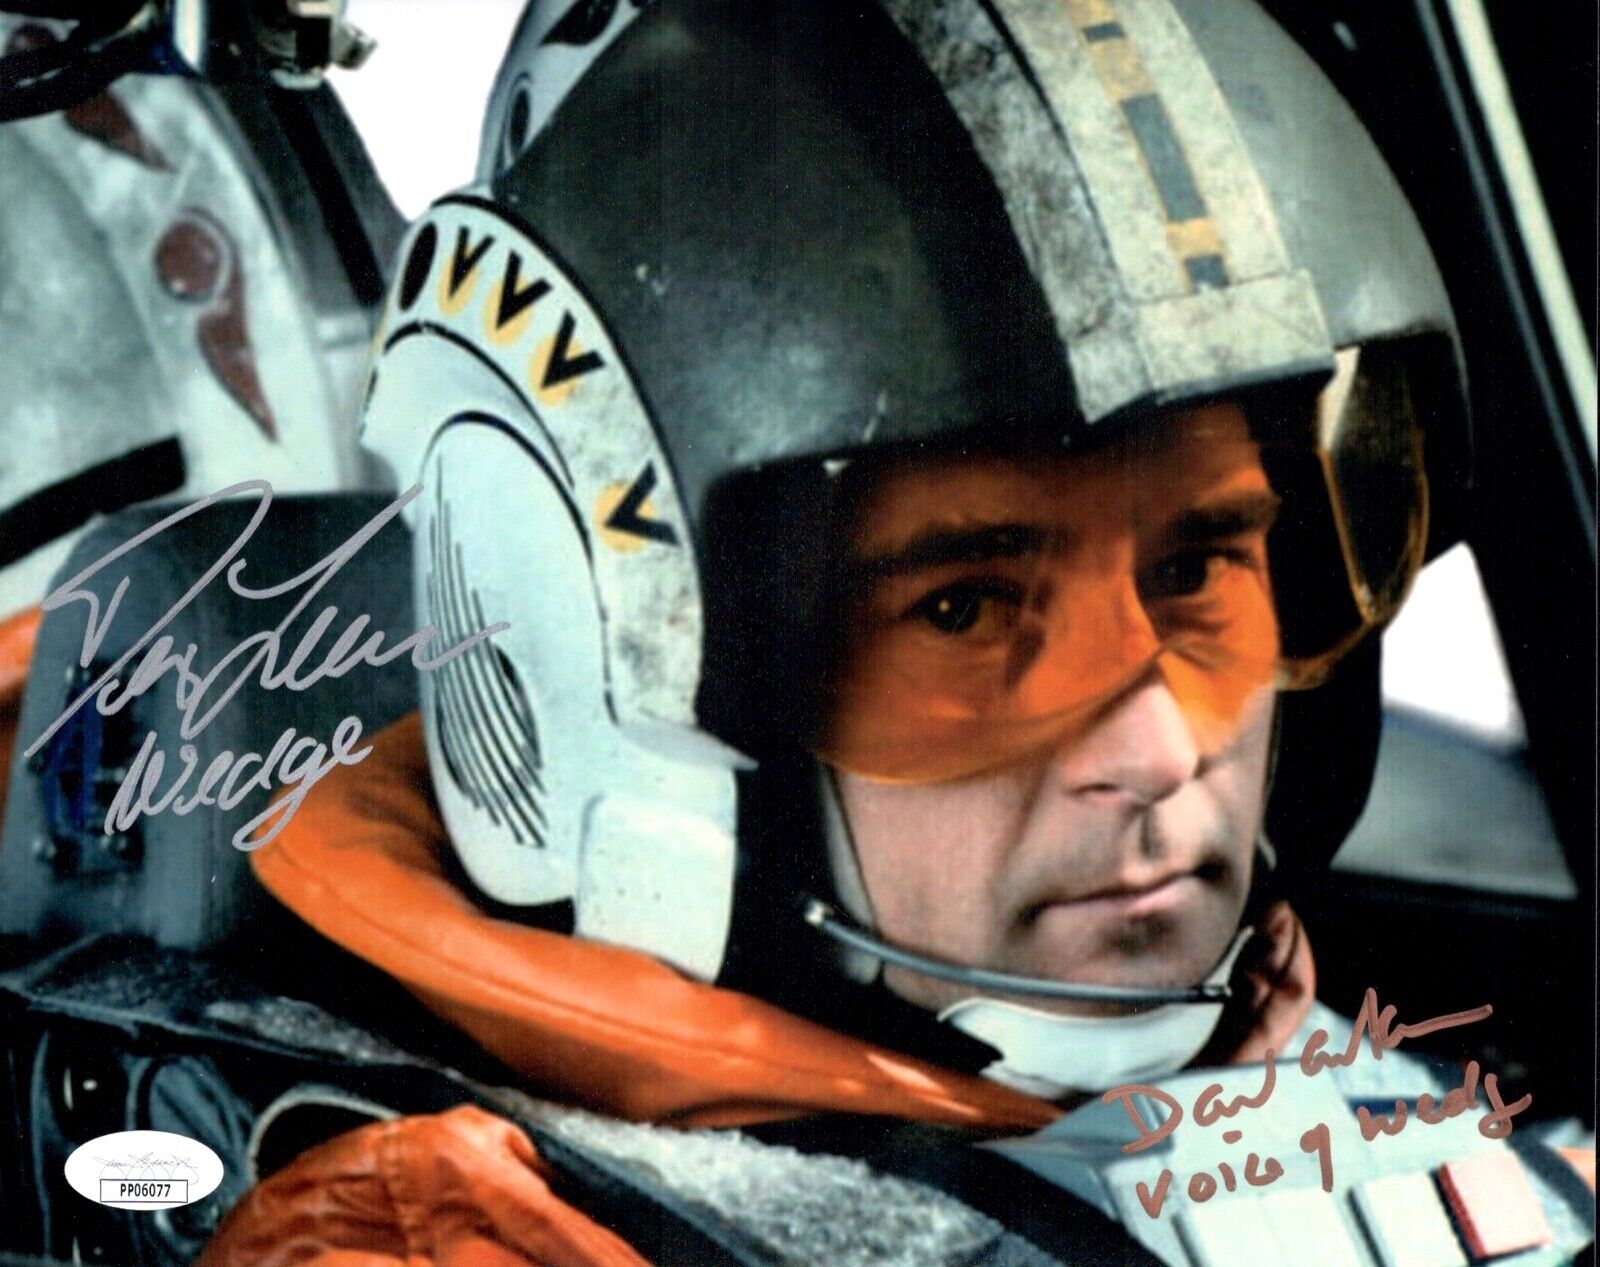 DENIS LAWSON & DAVID ANKRUM Signed 8x10 Star Wars A NEW HOPE WEDGE Photo Poster painting JSA COA